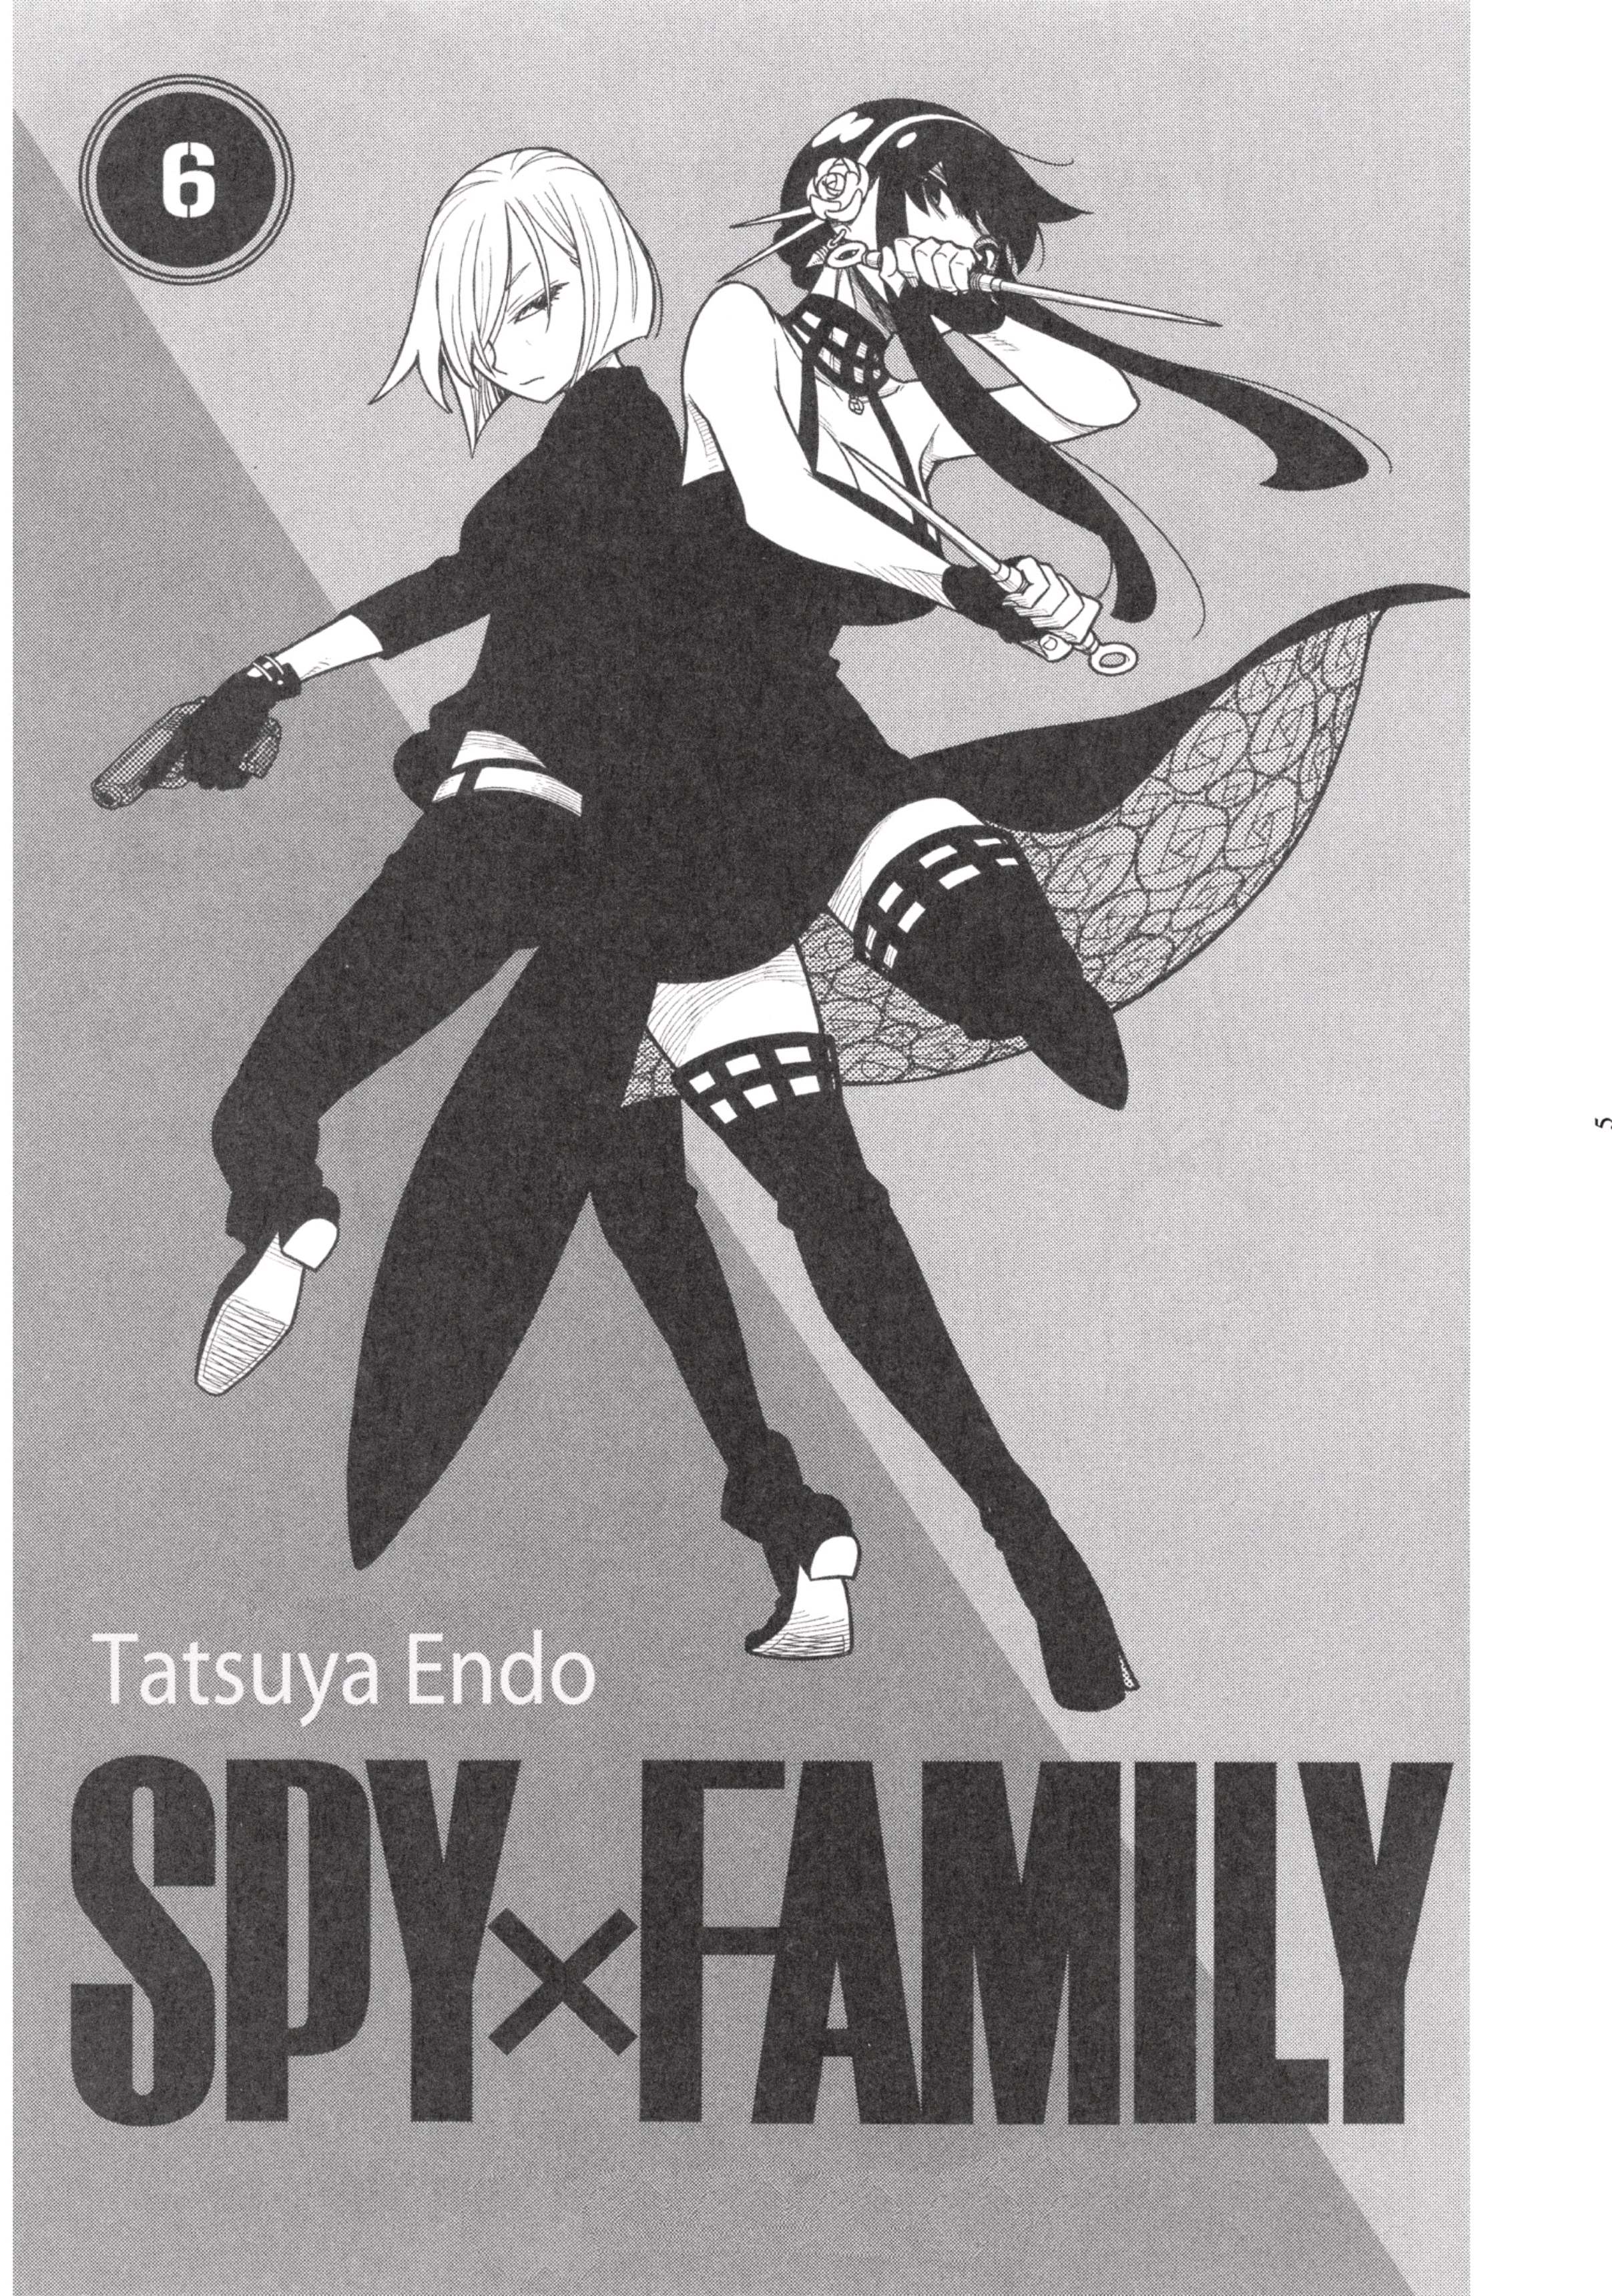 SPY X FAMILY 31 04